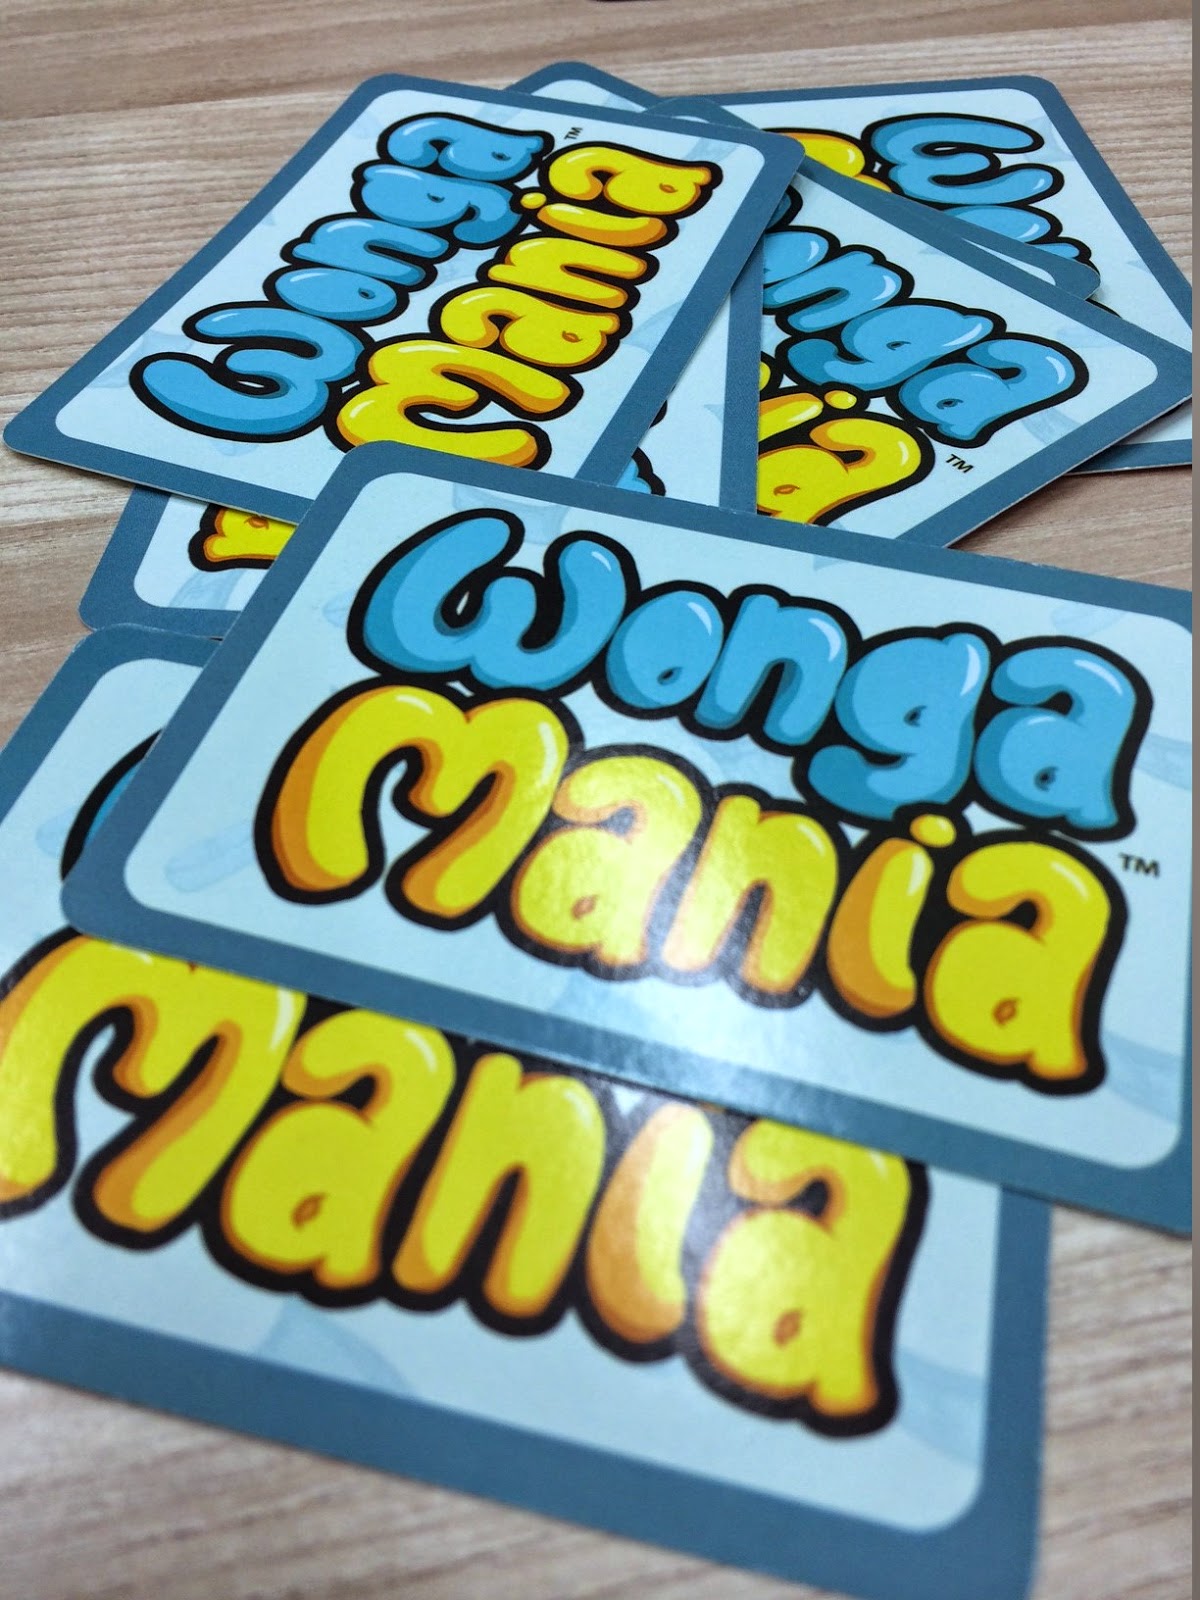 Wongamania card game